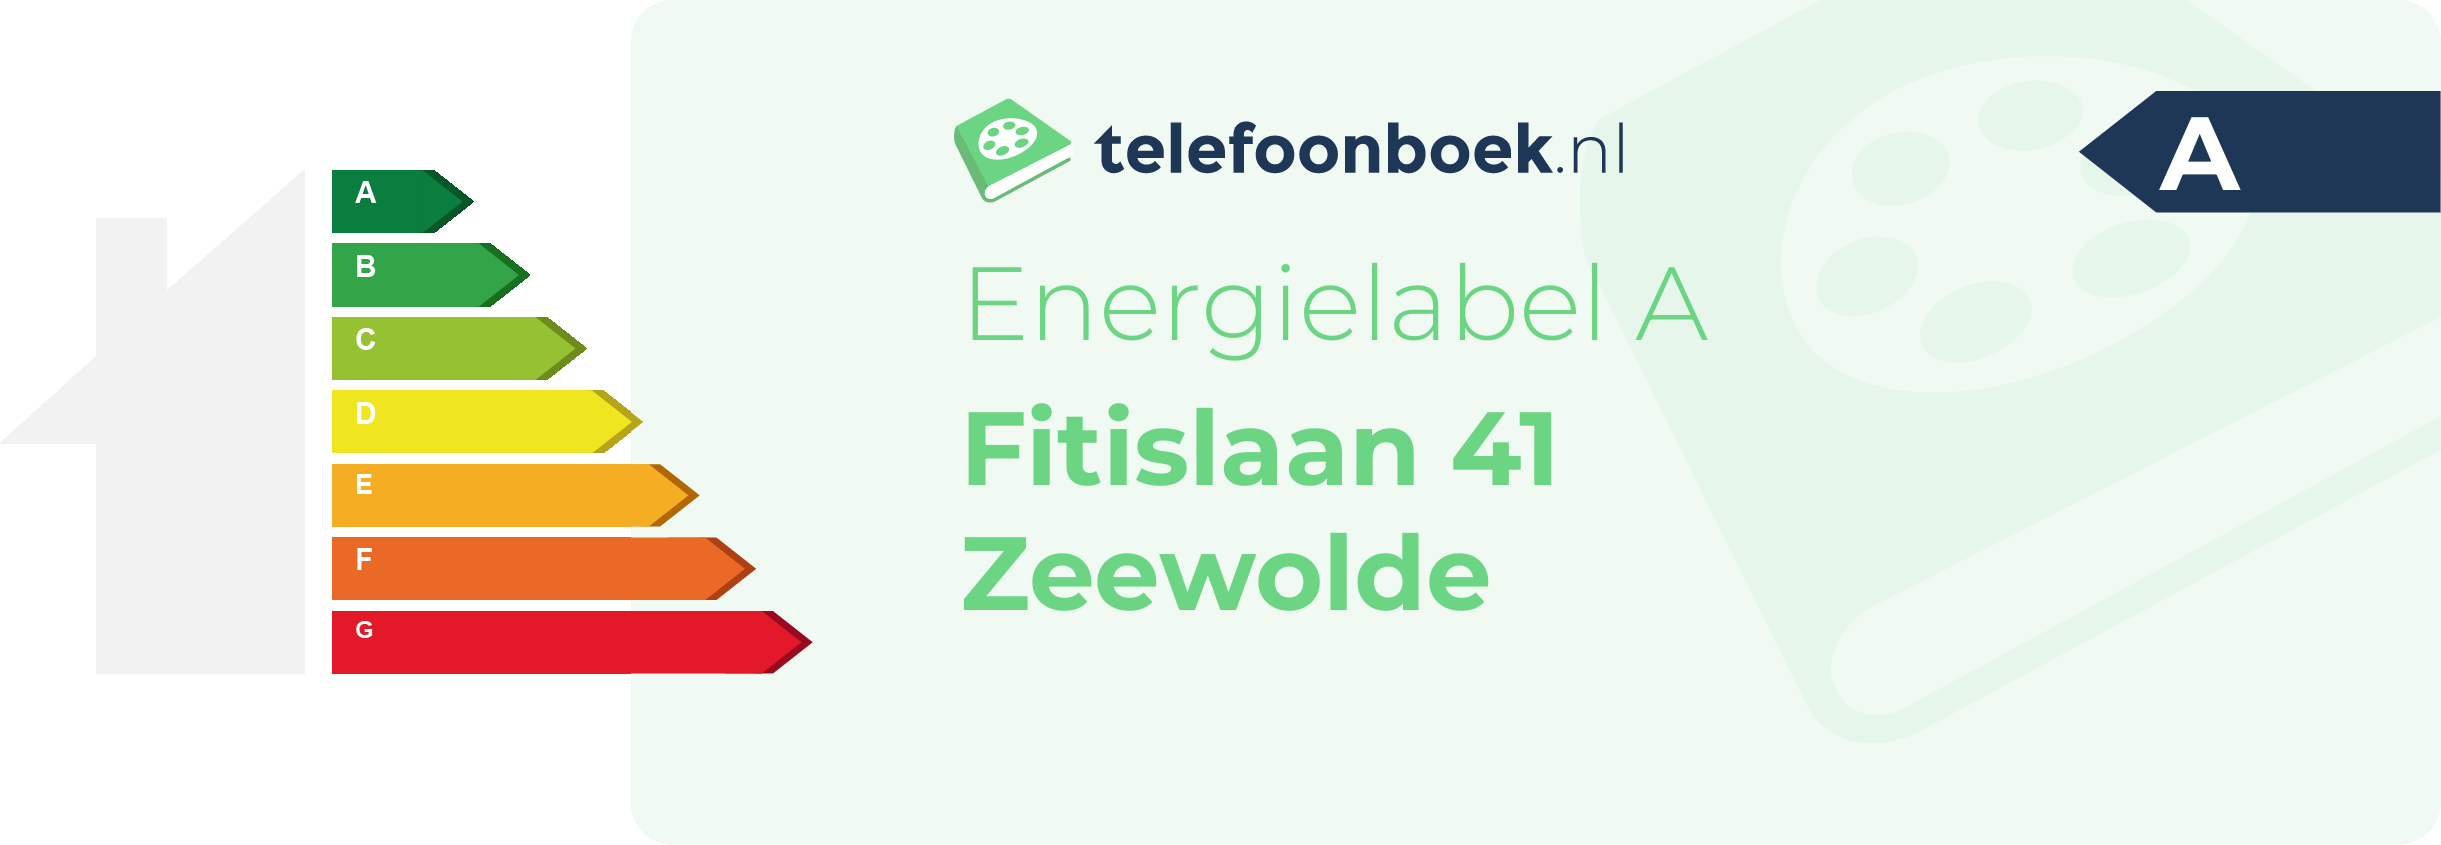 Energielabel Fitislaan 41 Zeewolde